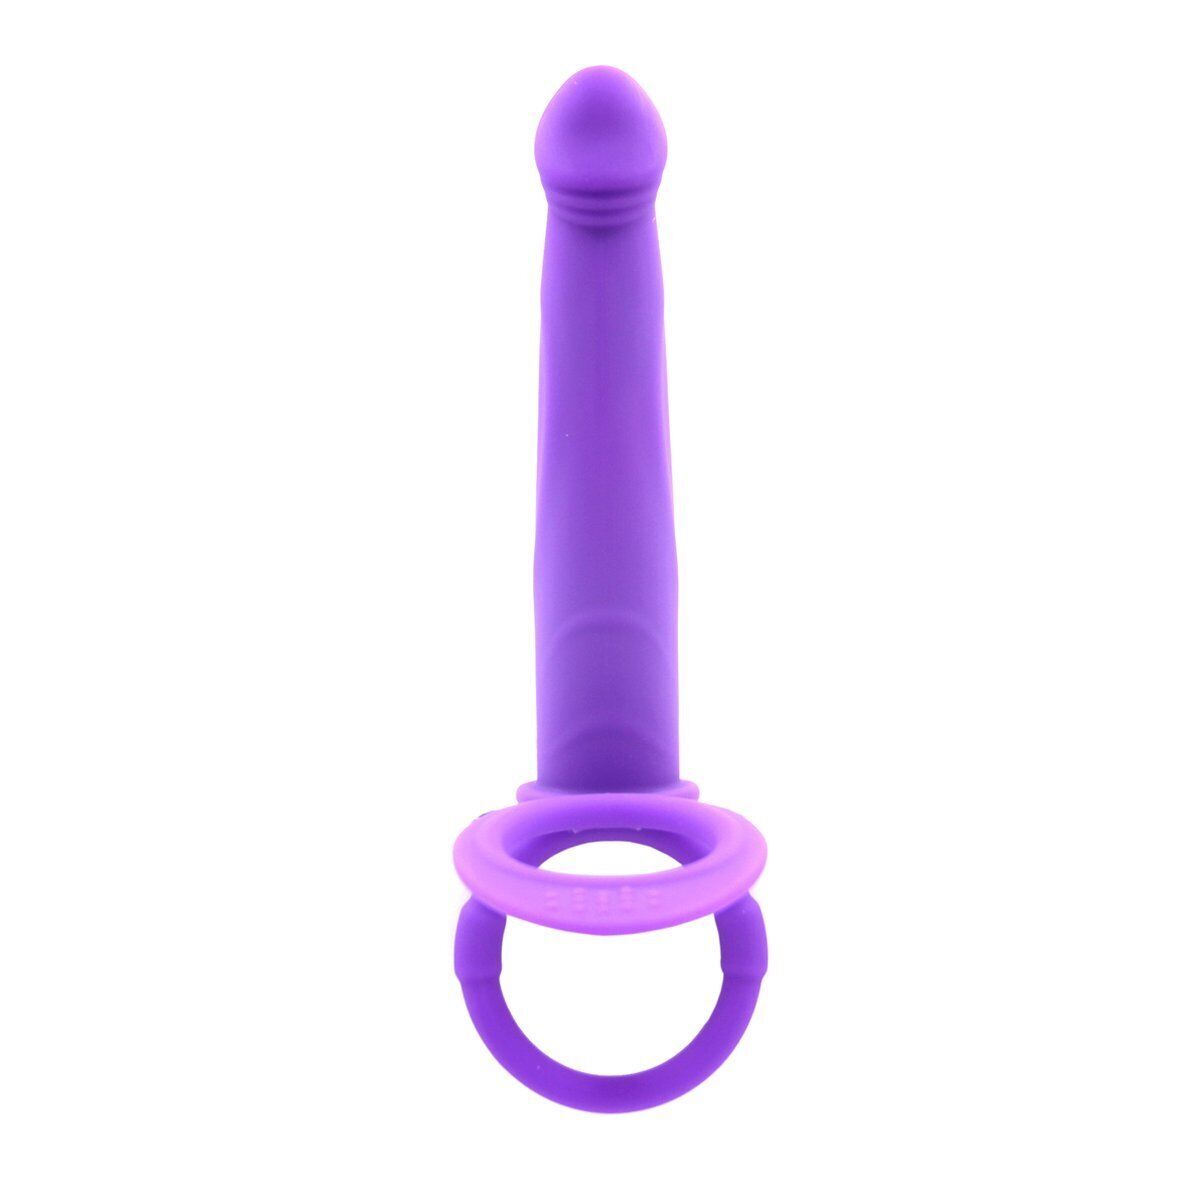 Dual Double Penetrator Penetration Vibrating Penis Cock Ring DP Anal Sex Dildo